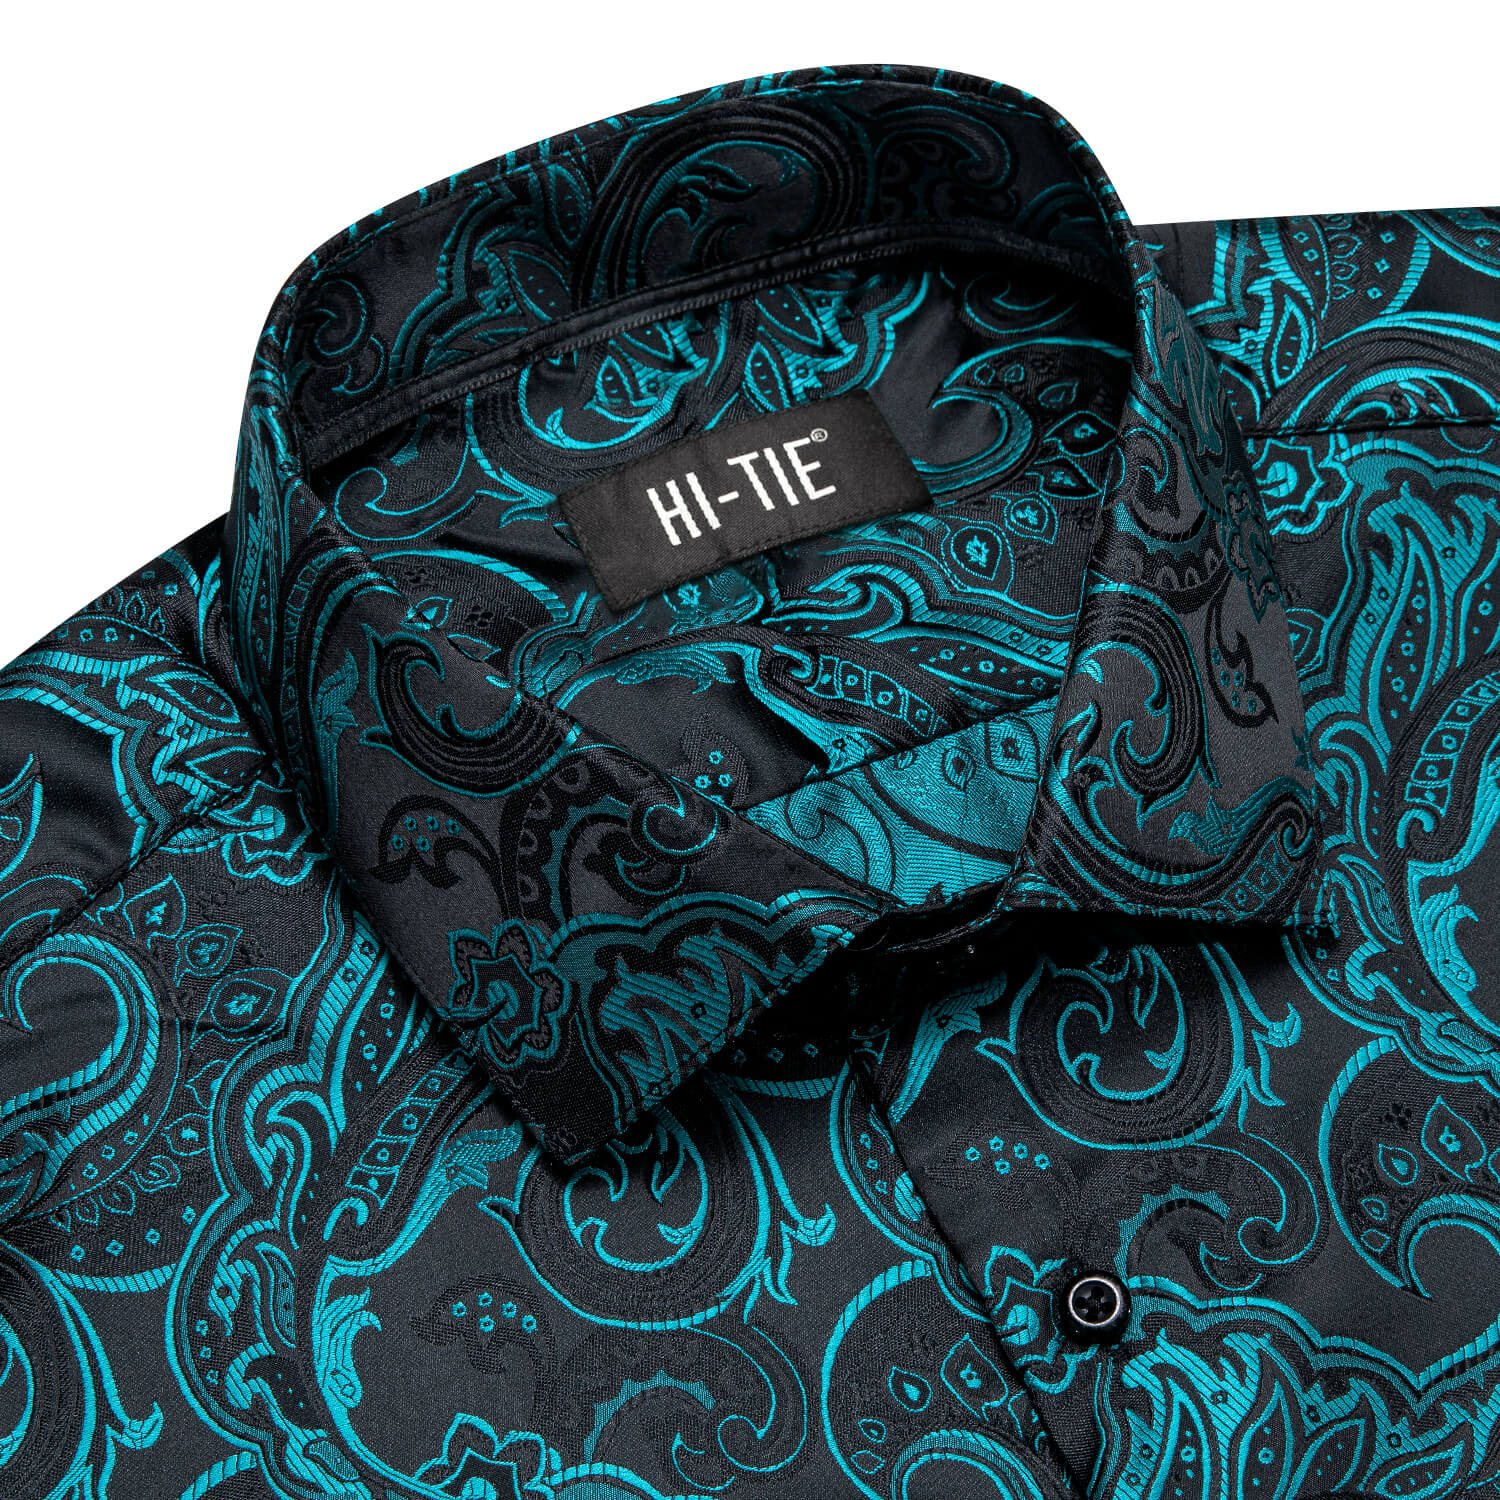 Hi-Tie Shirt for Men Black Teal Paisley Jacquard Woven Silk Shirt